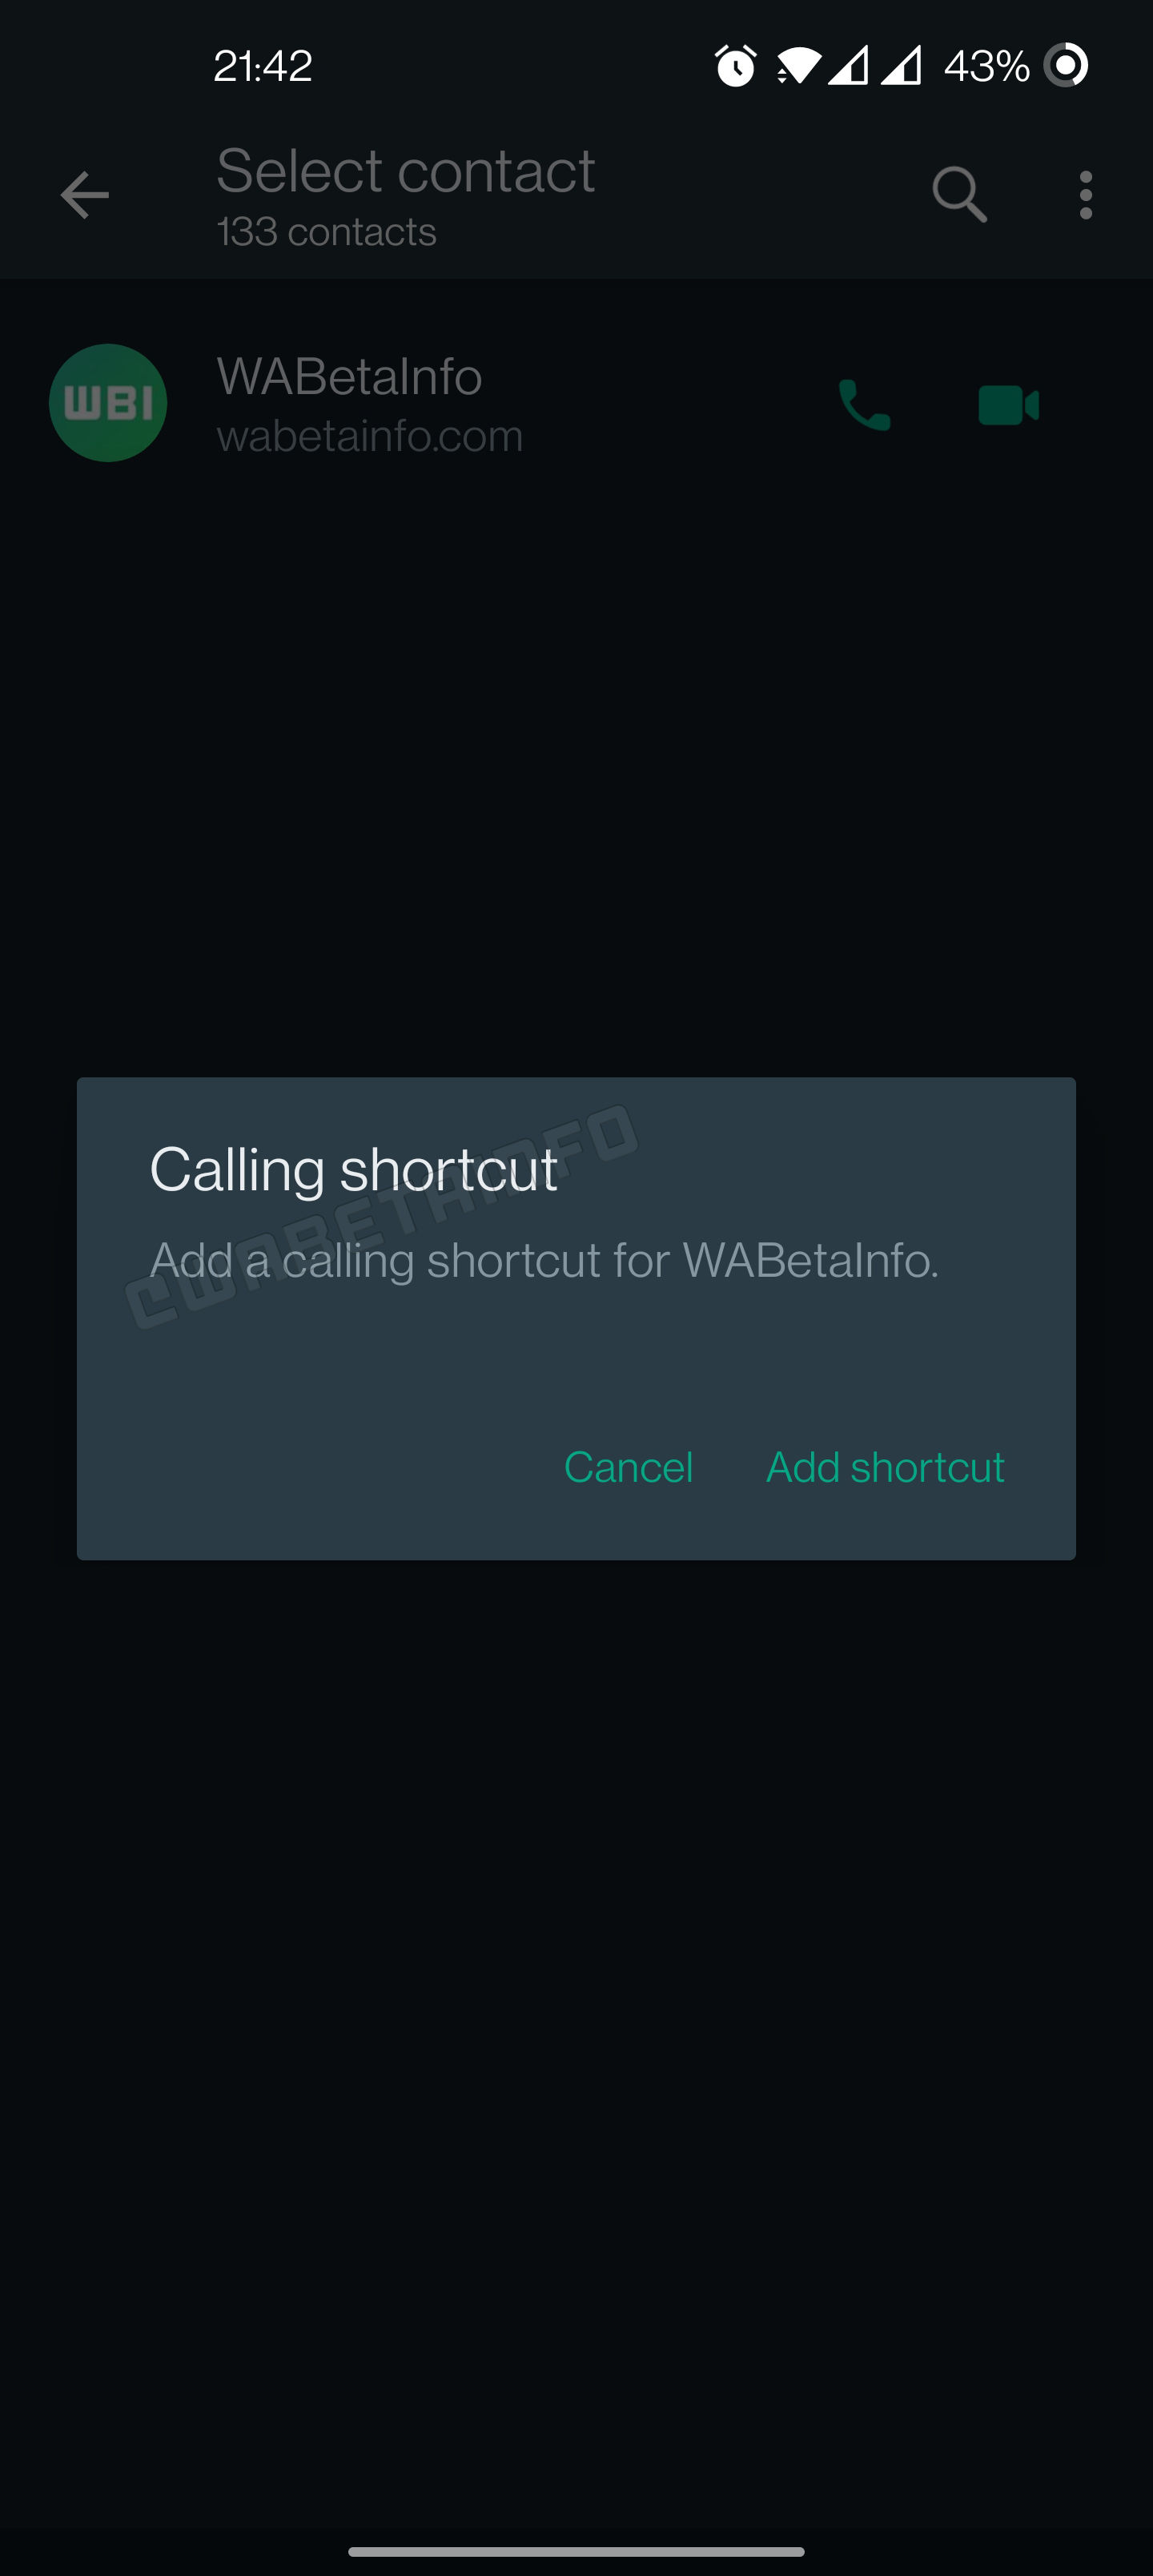 Calling shortcut